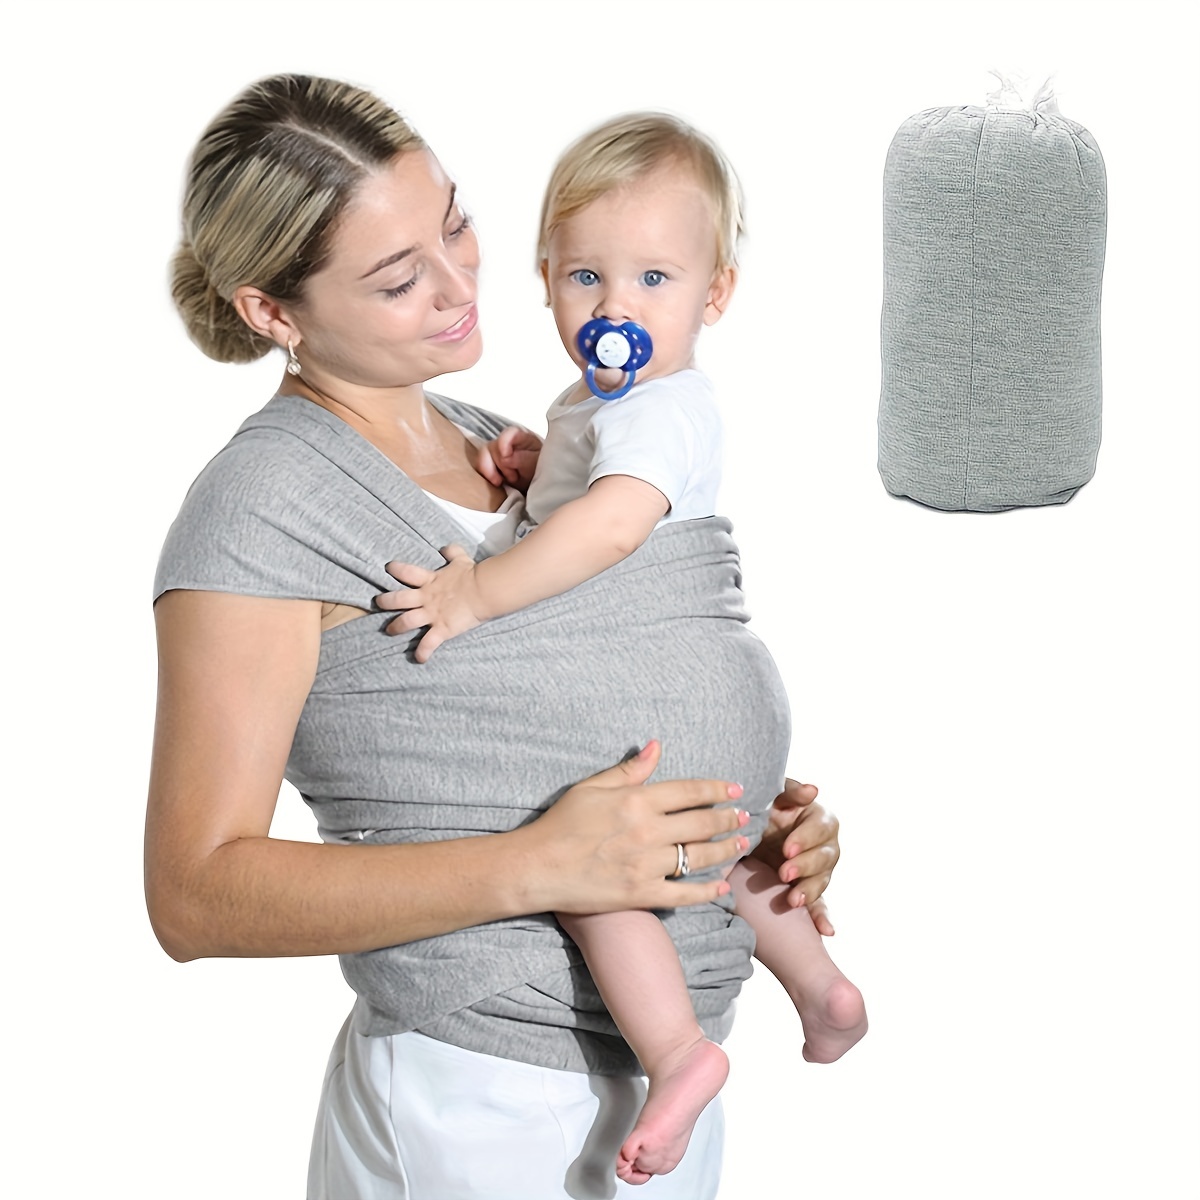 Baby-Halte-Artefakt Befreit Hände, Riemen, Neugeborenes Baby